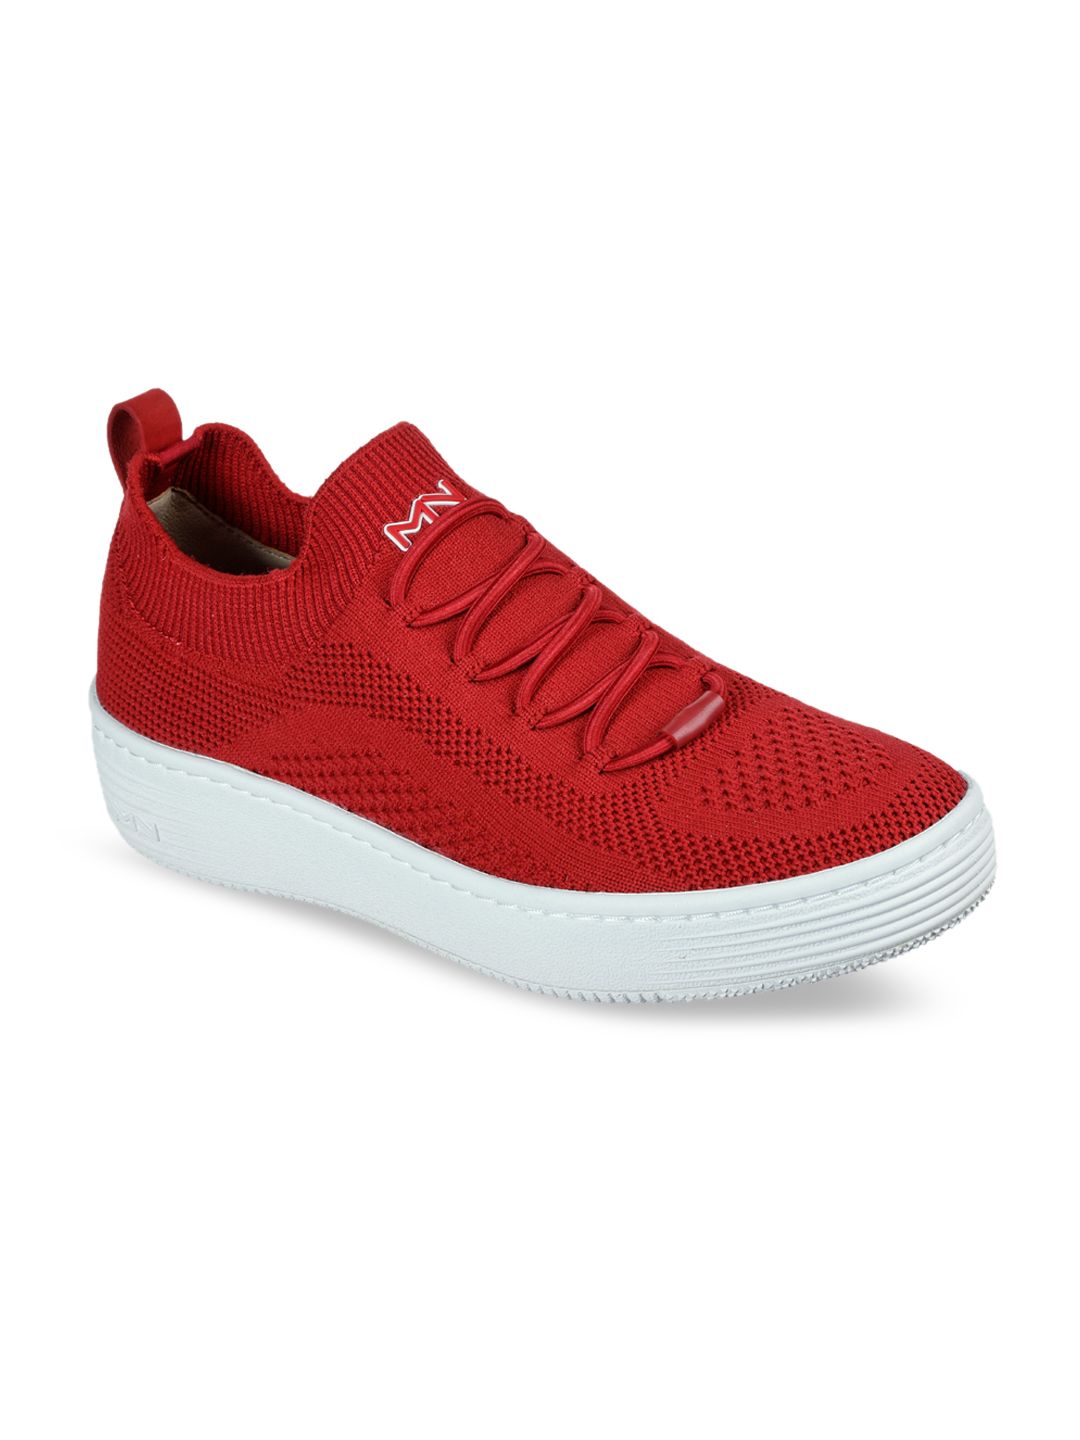 Skechers Women Red Printed Slip-On Sneaker Price in India